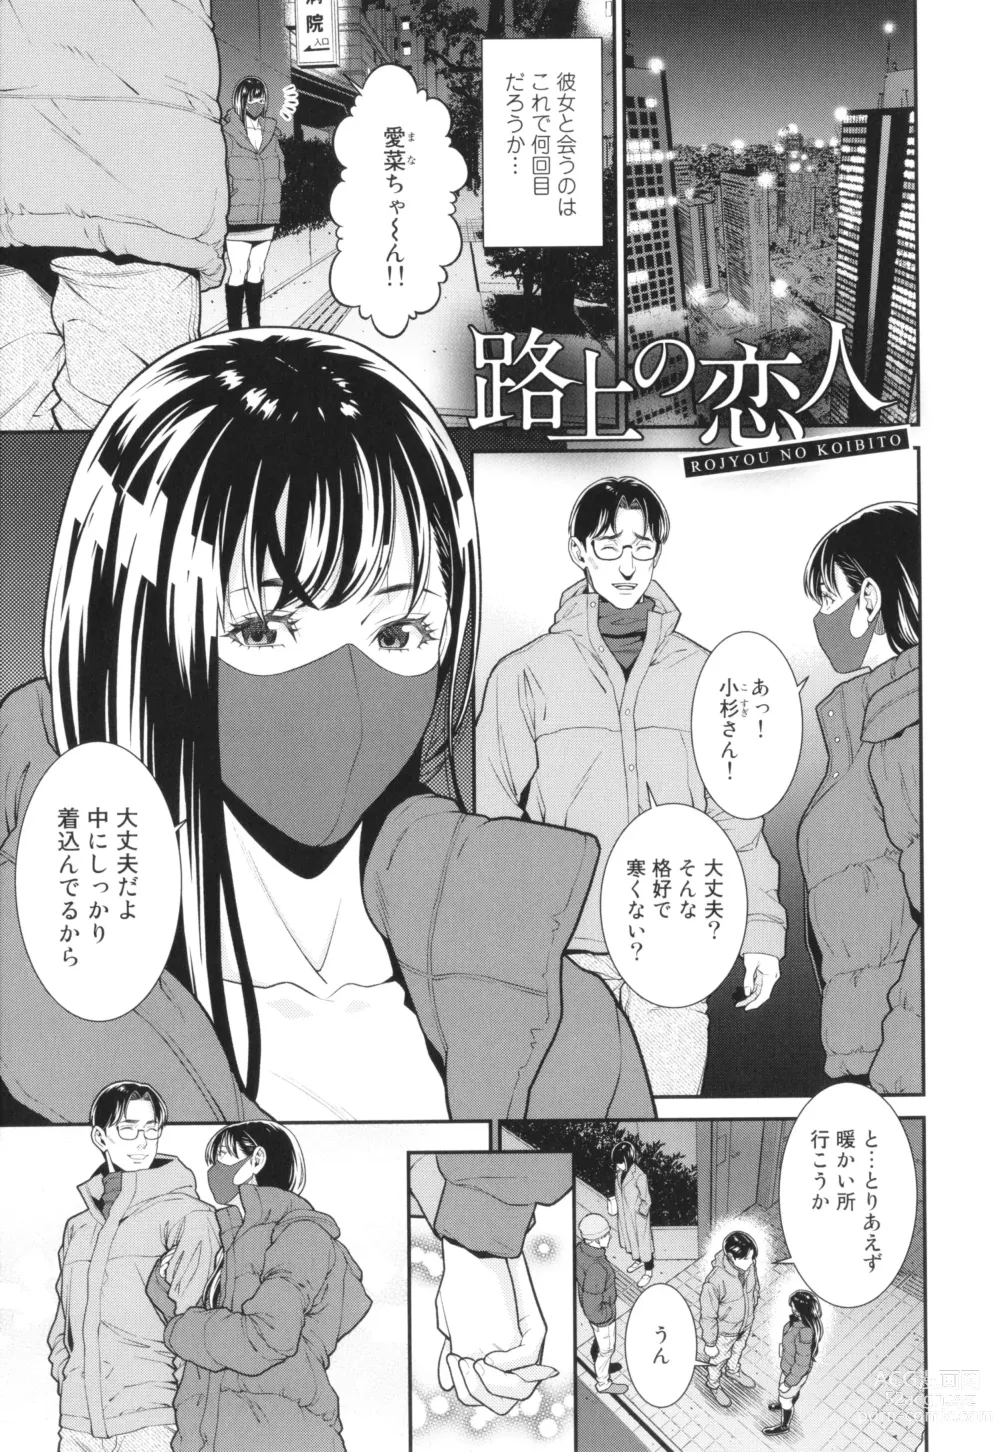 Page 156 of manga Onna ni Kagi wa Kakerarenai